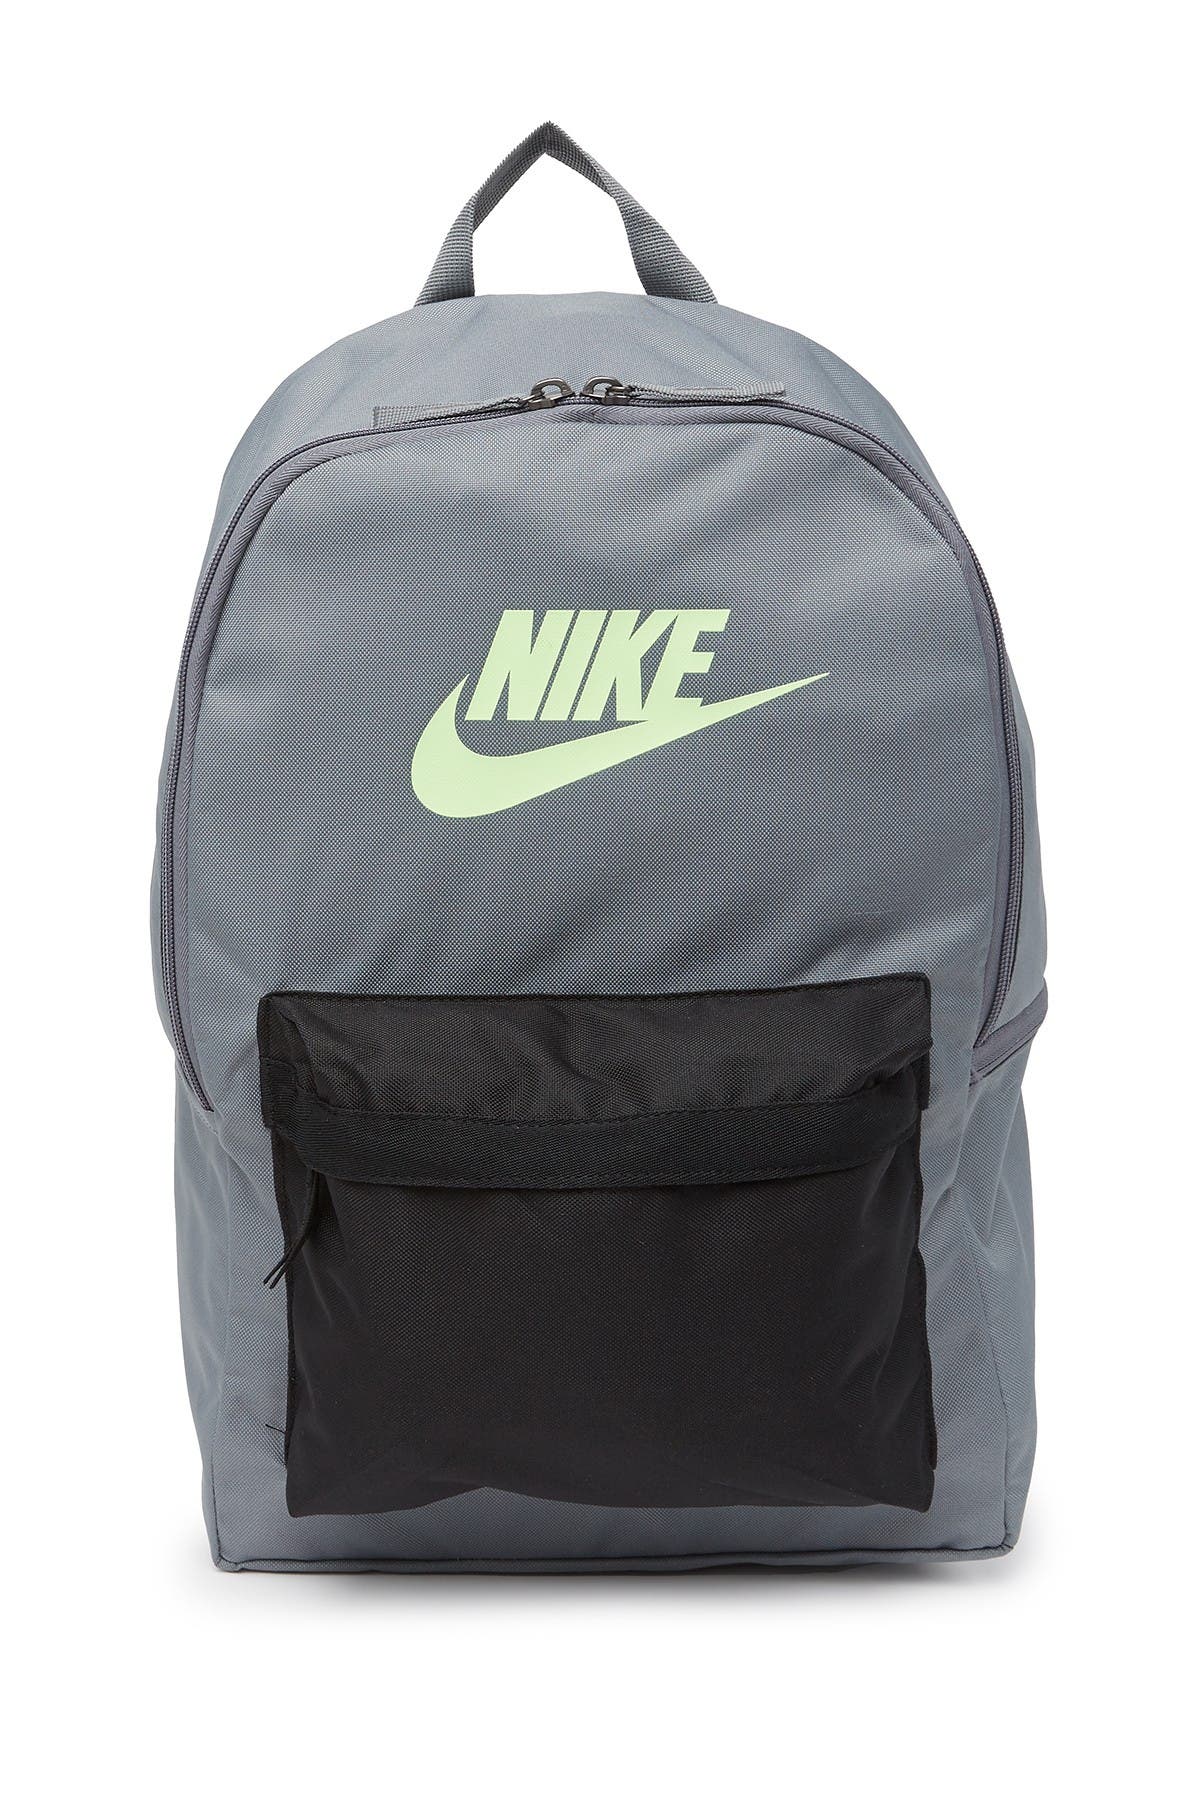 nike backpacks lowest price